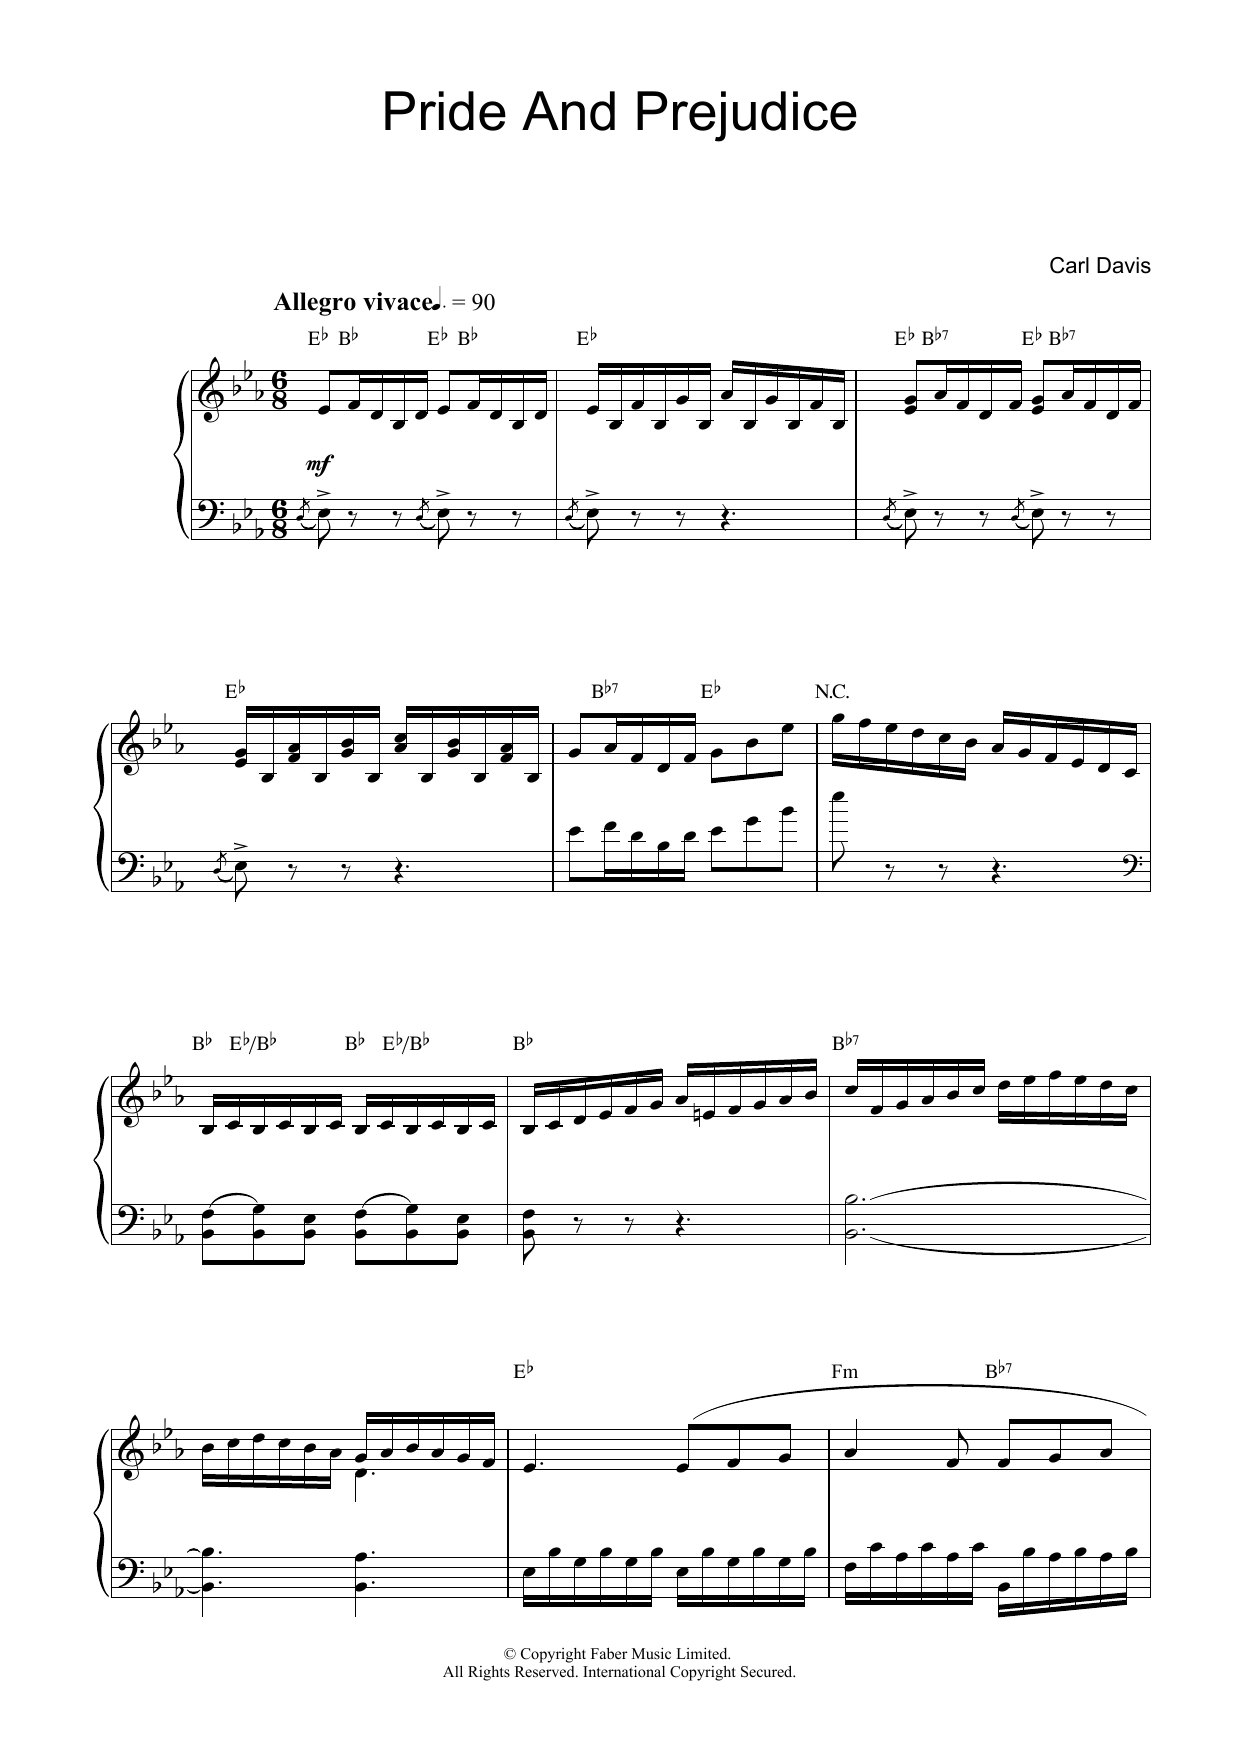 Carl Davis Pride And Prejudice Sheet Music Notes & Chords for Flute - Download or Print PDF